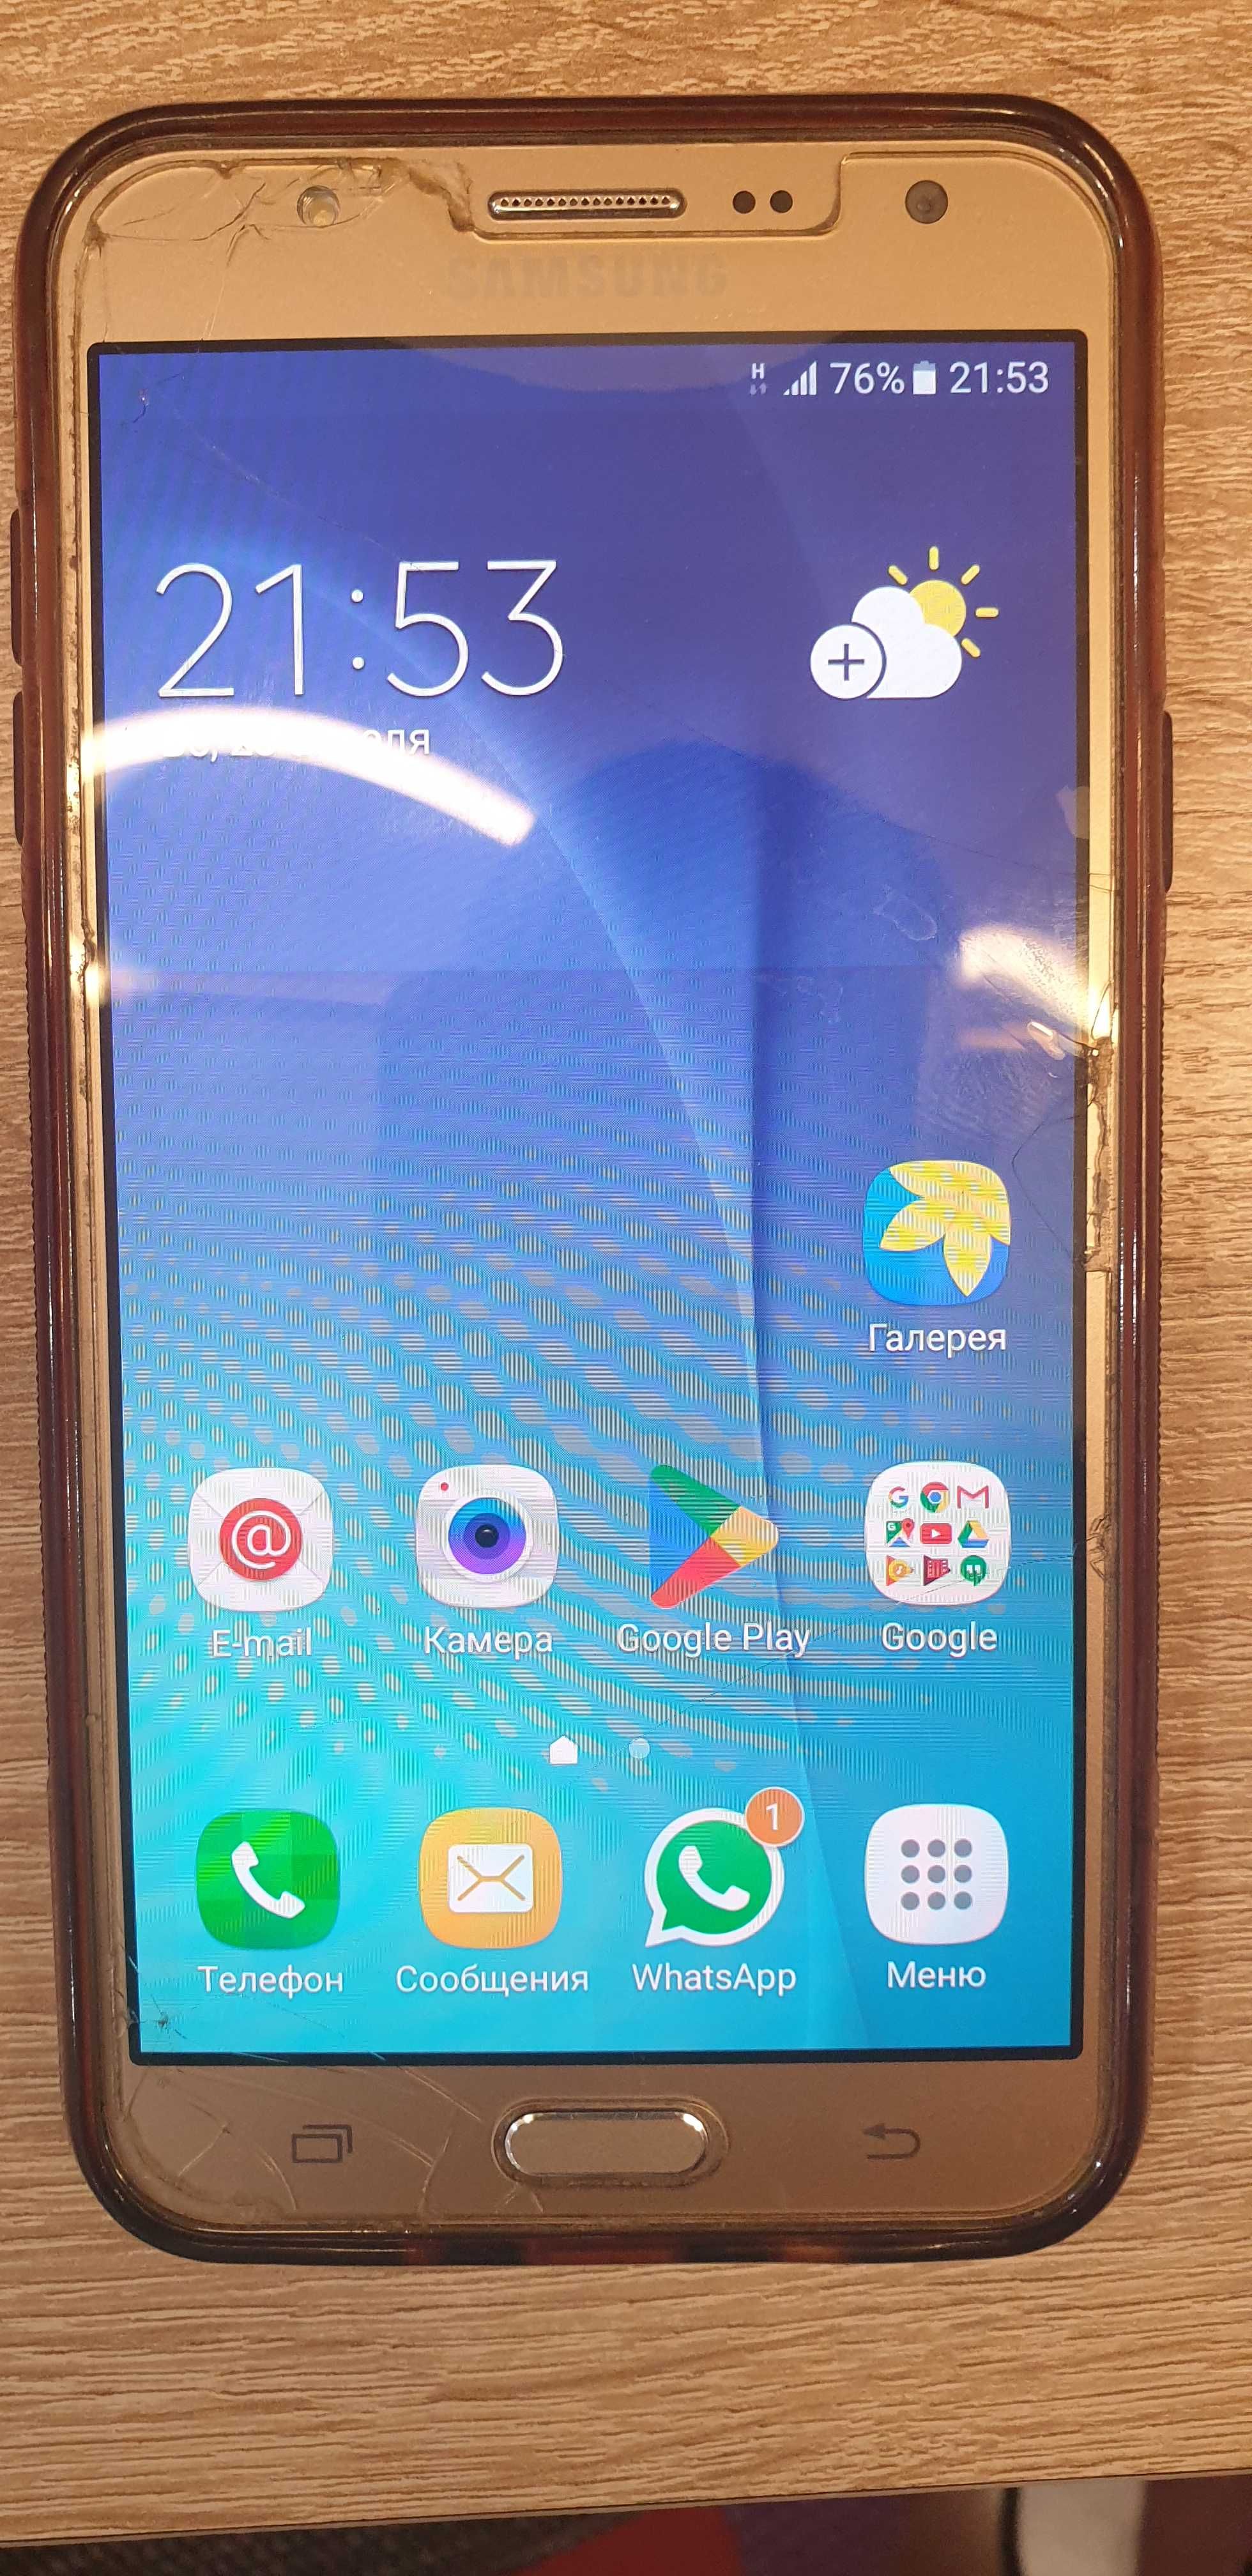 Samsung Galaxy J7 SM-J700H Duos Gold